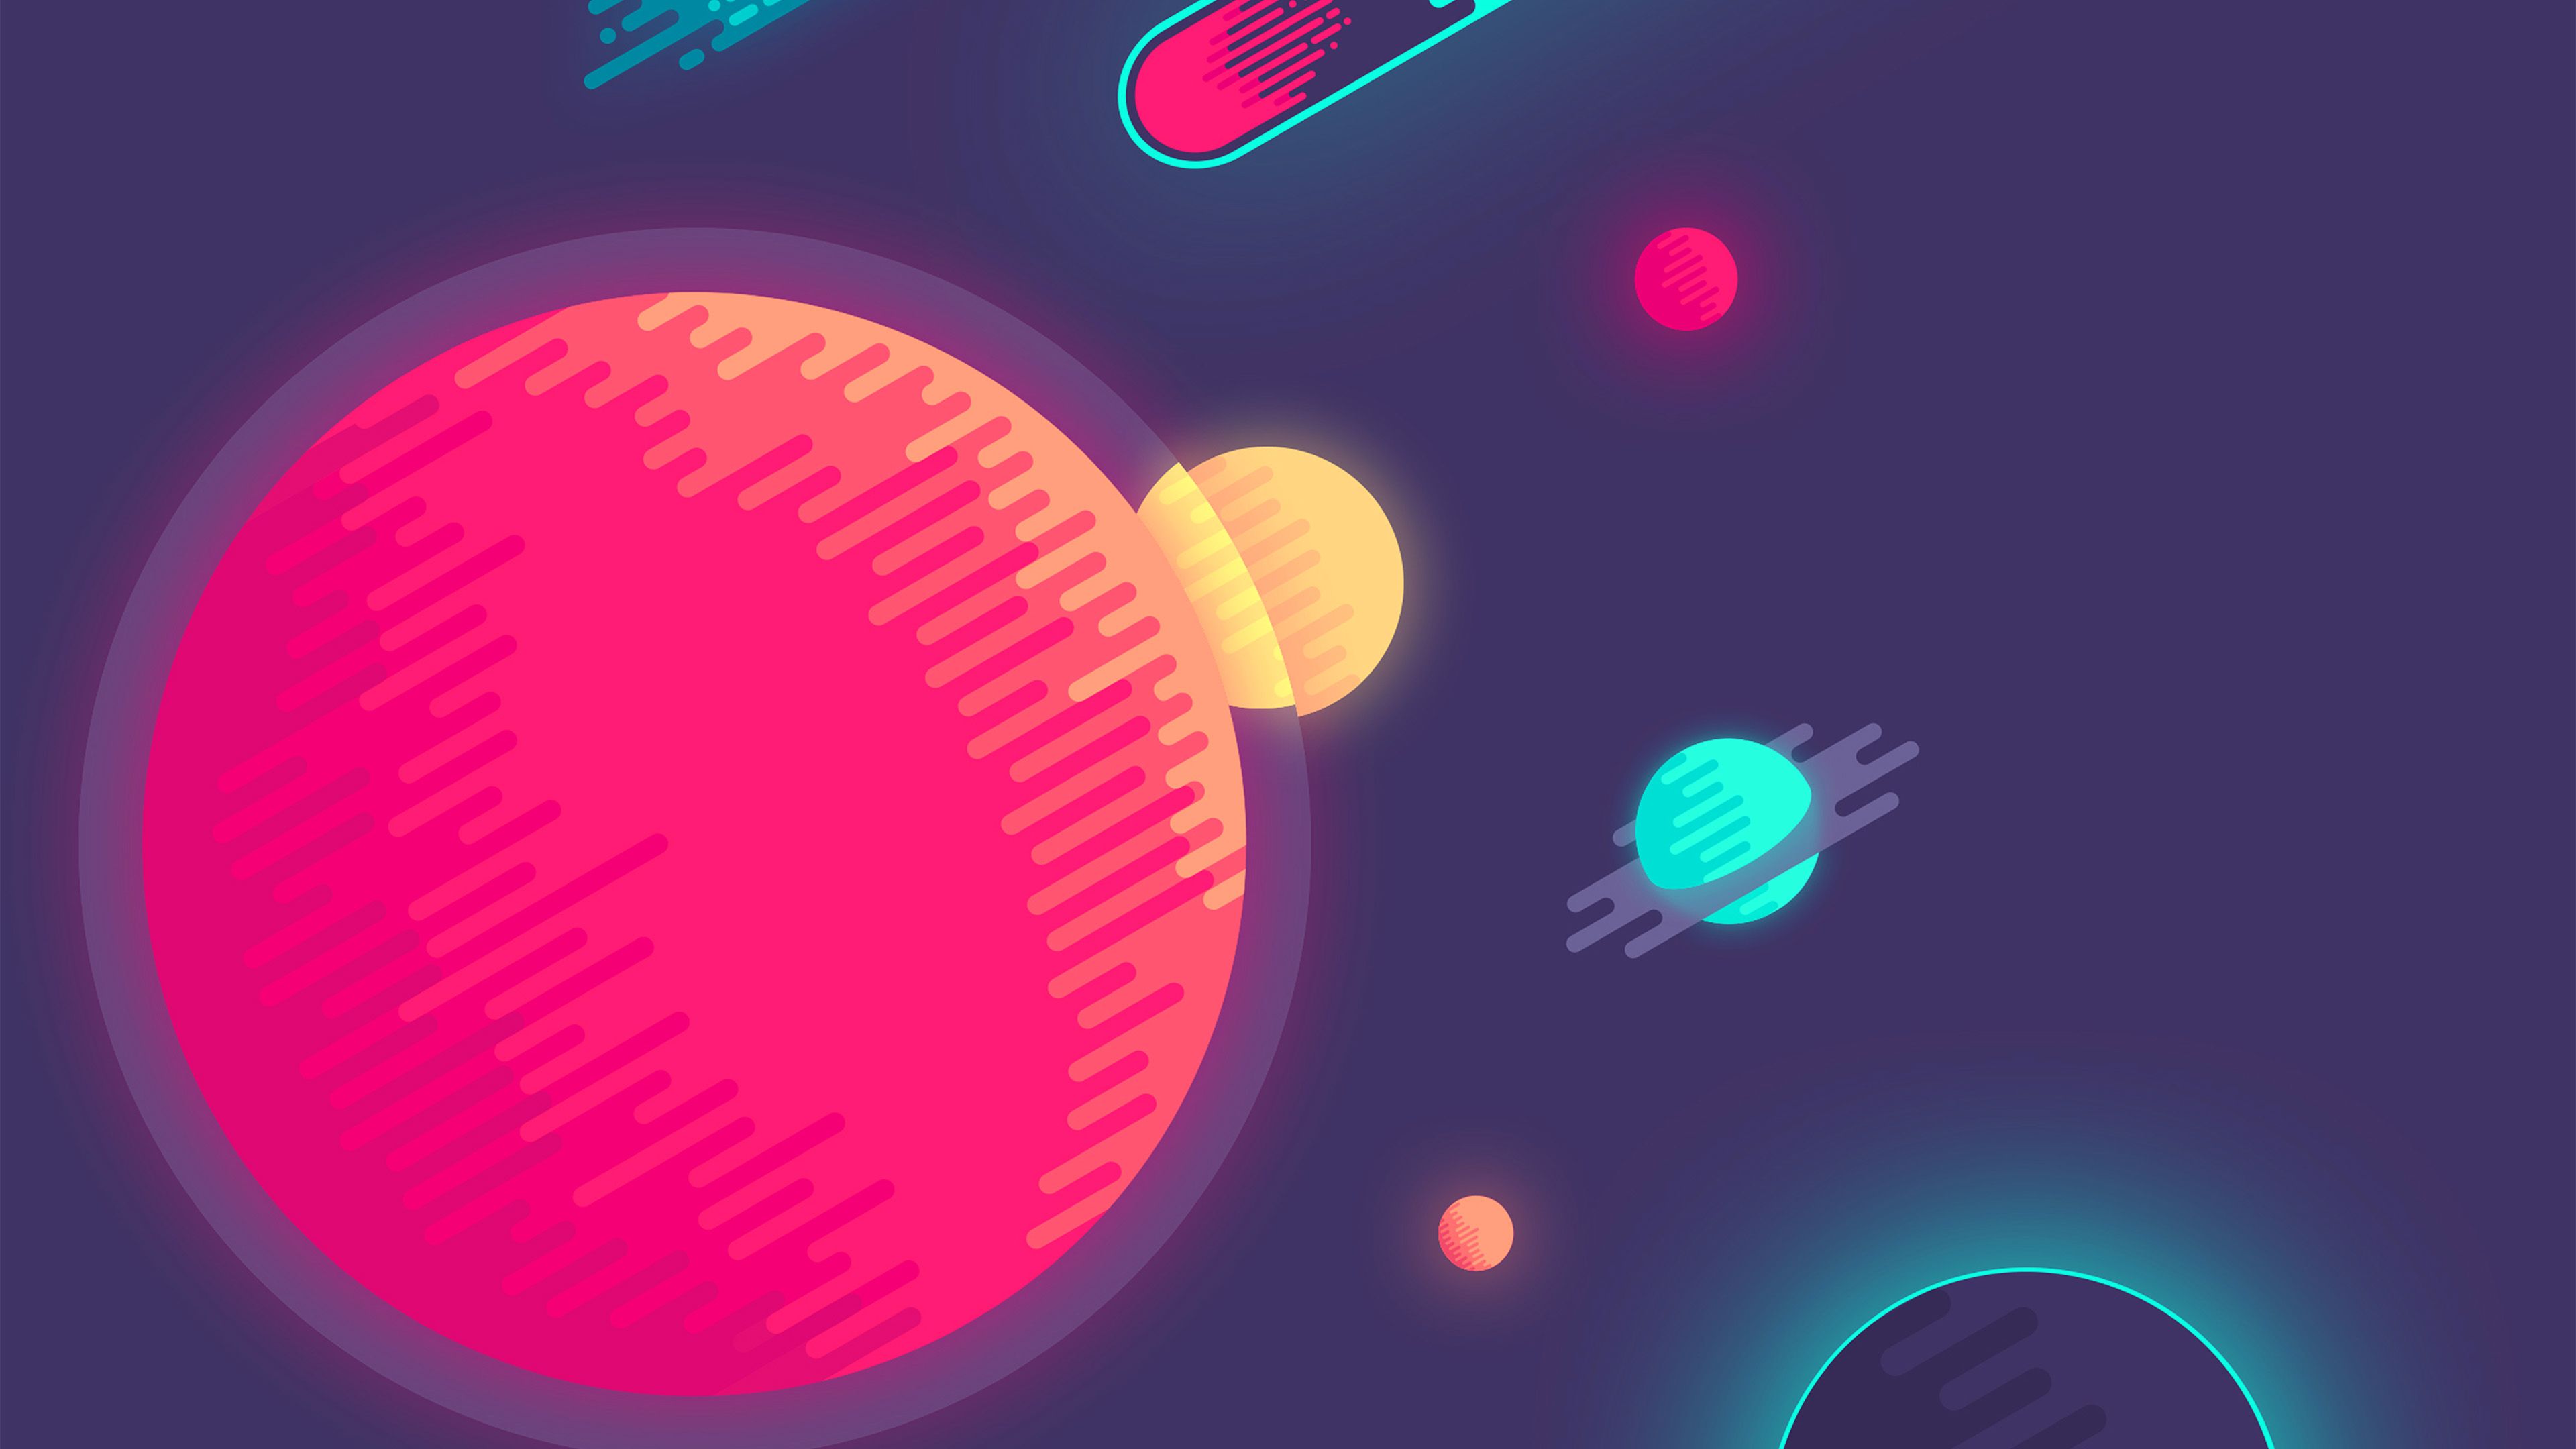 Space Minimal Art Illustration Wallpaper